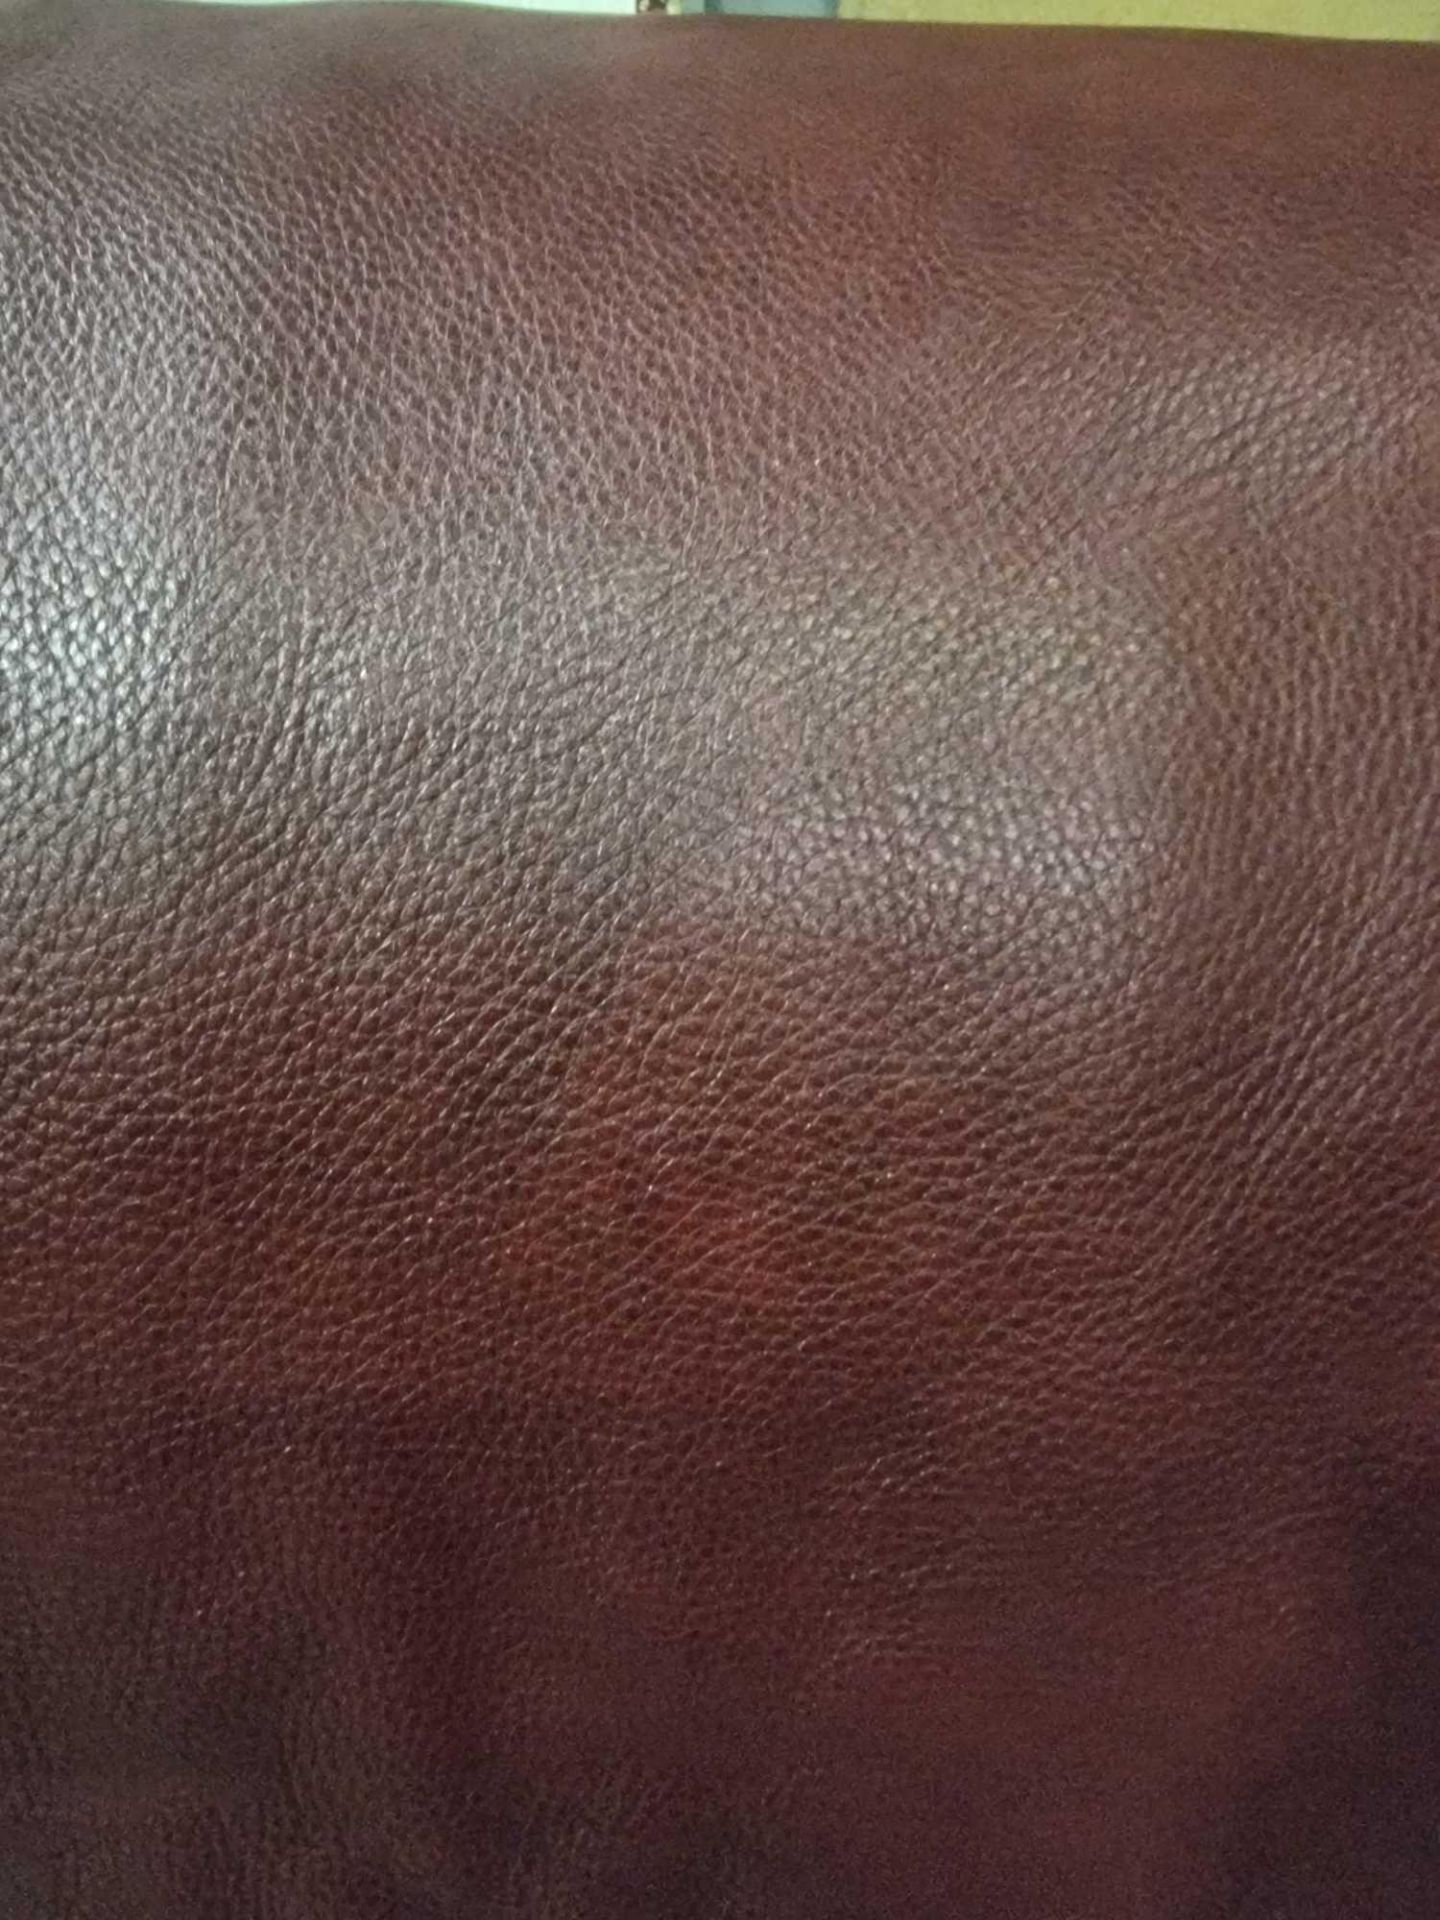 Palazzo Grenadine Leather Hide approximately 4 83M2 2 3 x 2 1cm ( Hide No,114)